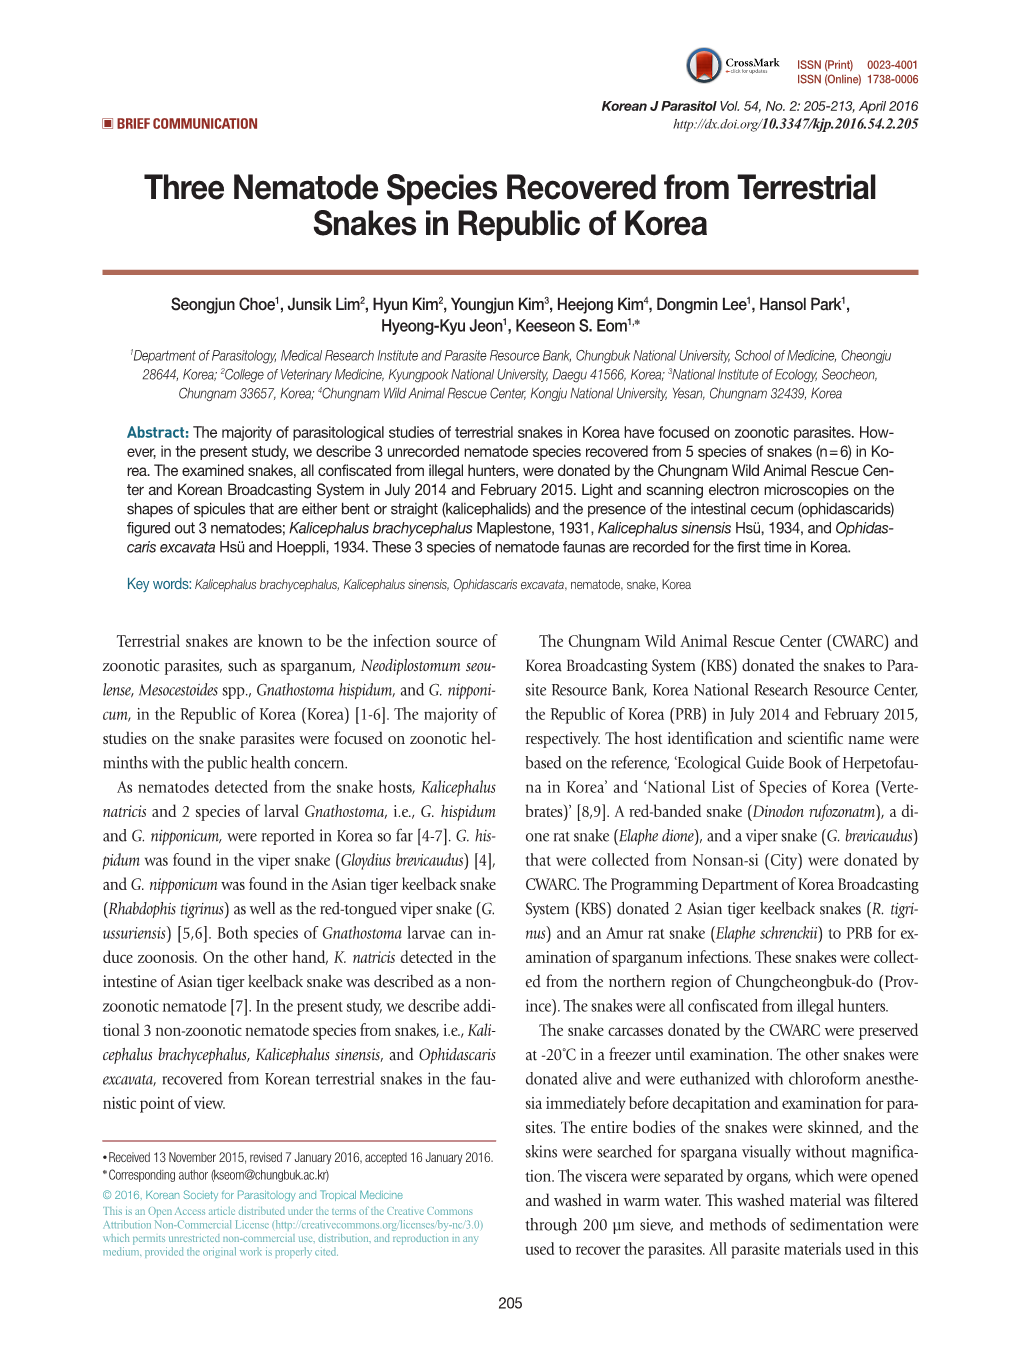 Three Nematode Species Recovered from Terrestrial Snakes in Republic of Korea